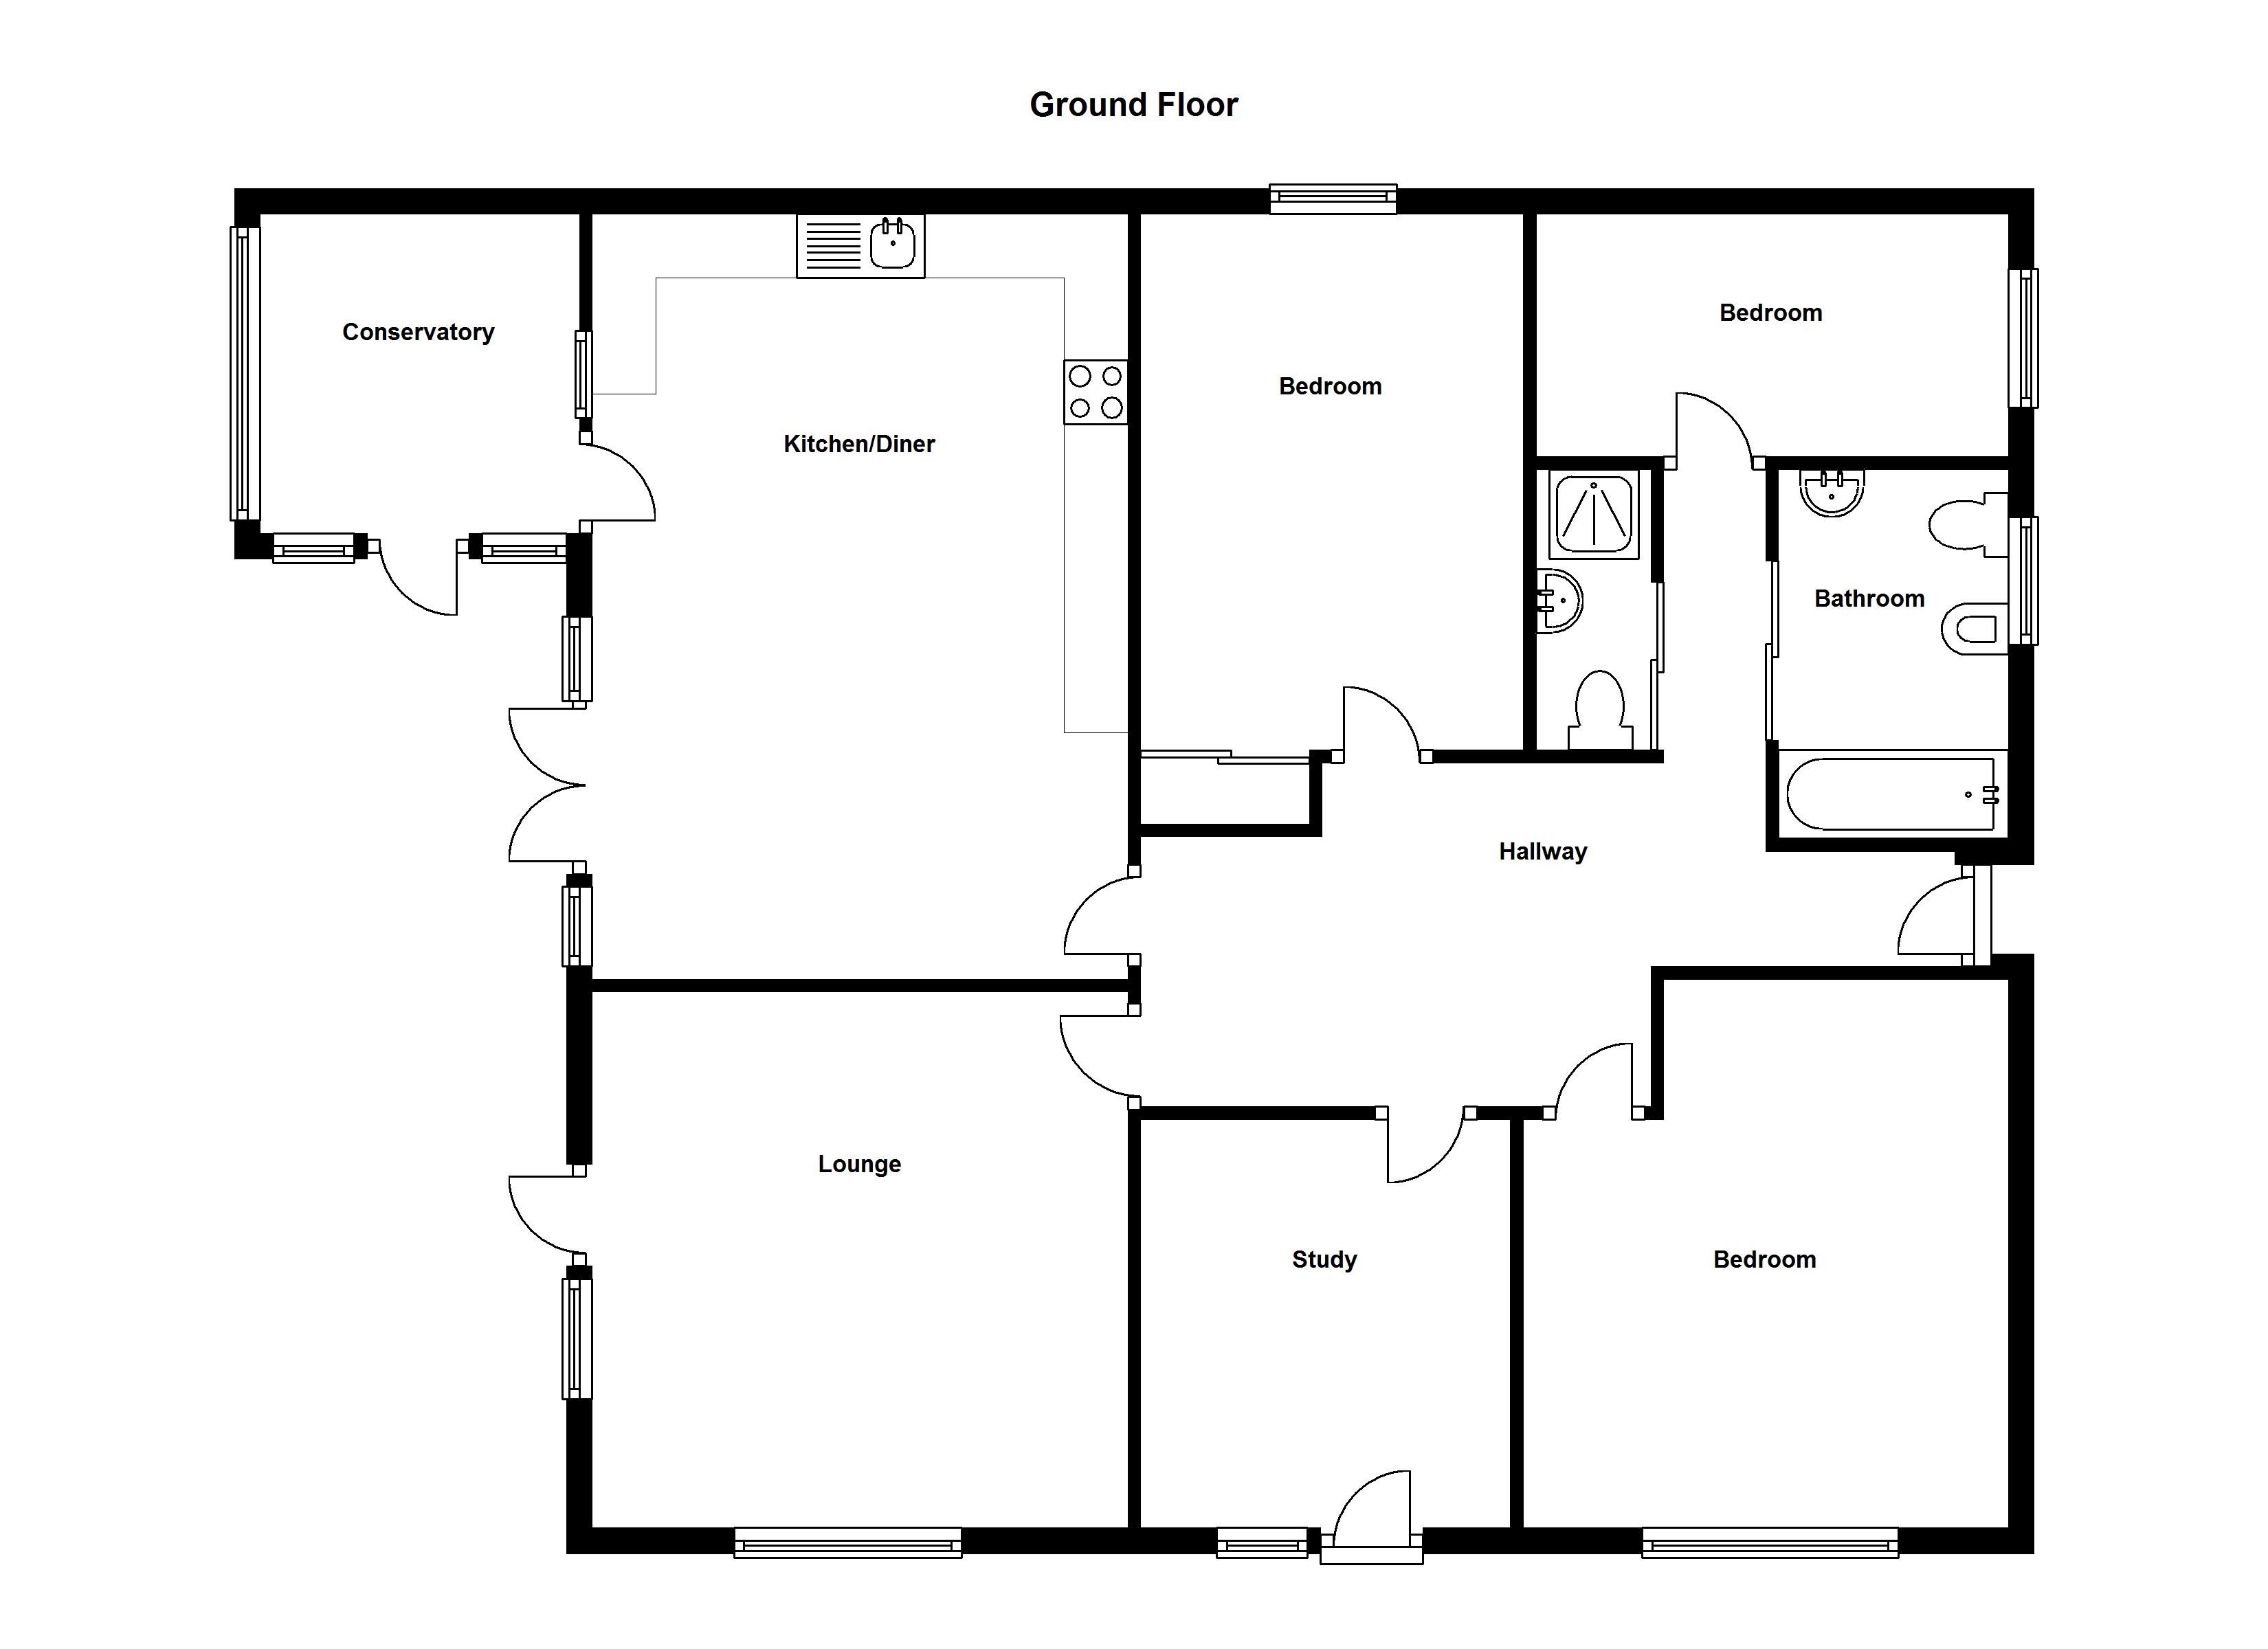 House Plan Ideas: Bungalow Floor Plans 4 Bedroom